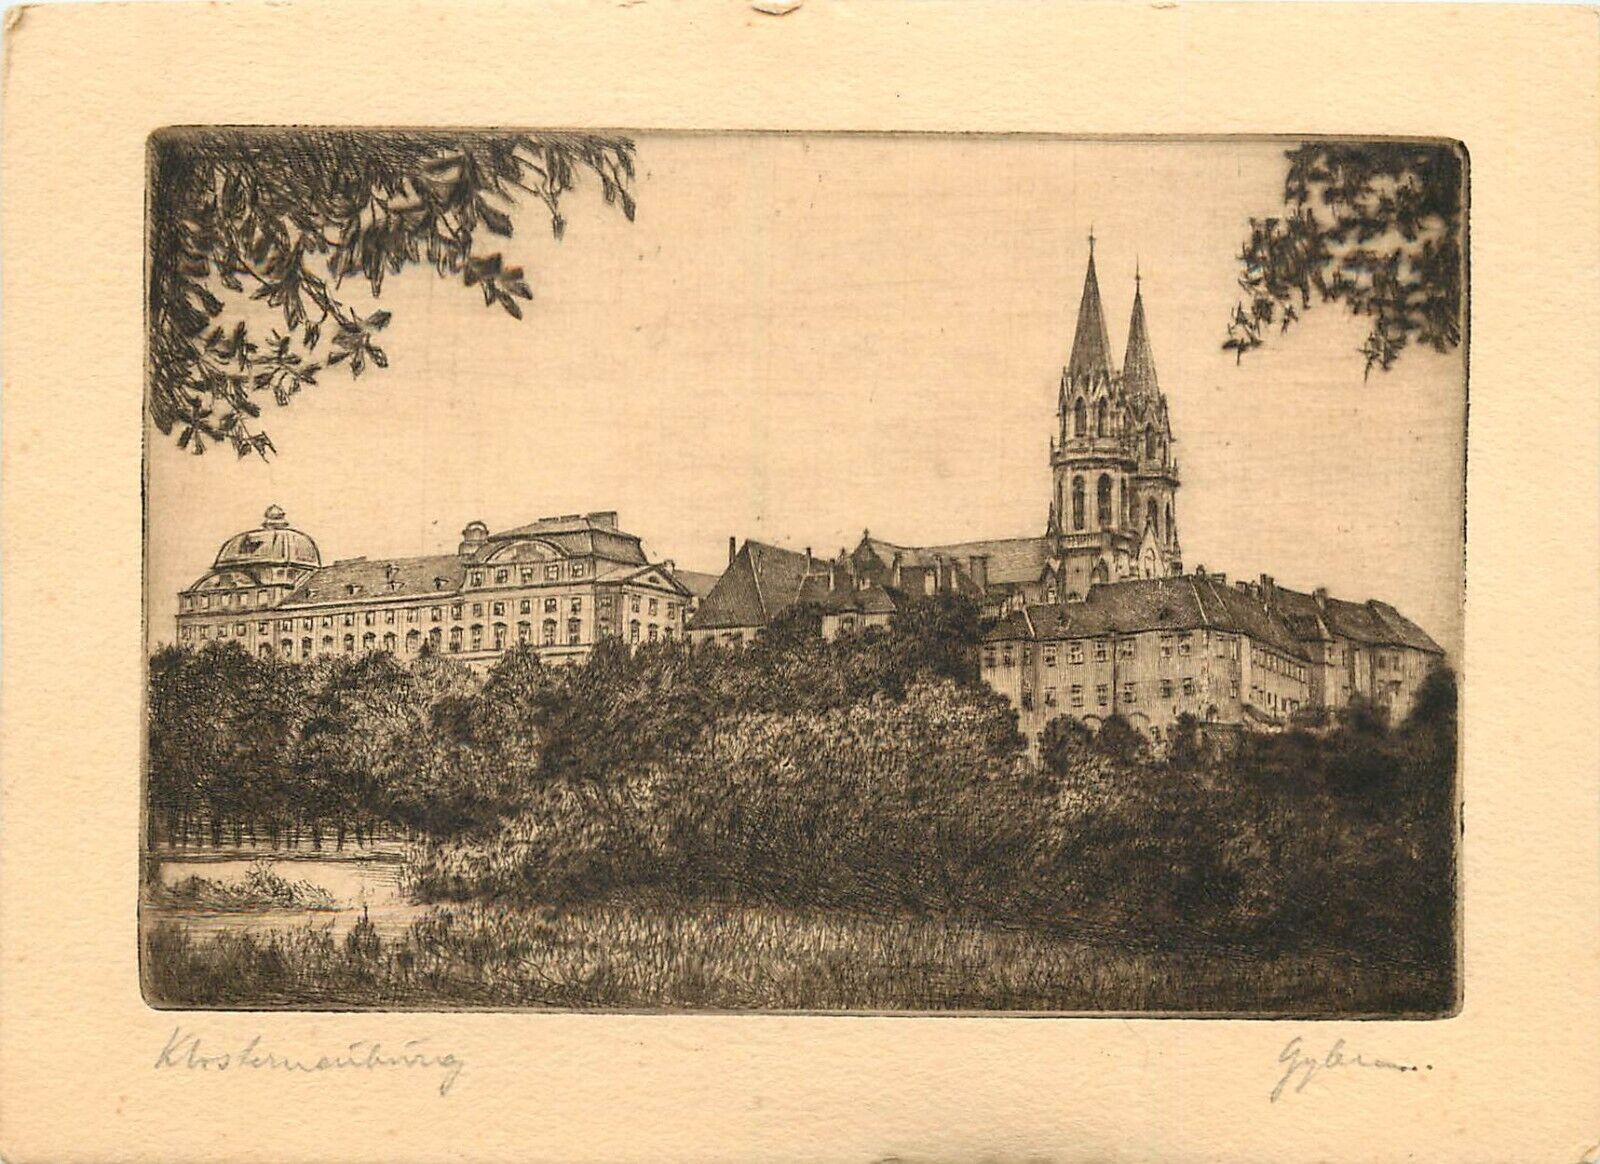 c1900 Small Etching Print Postcard; Klosterneuburg Abbey, Austria, Artist Signed